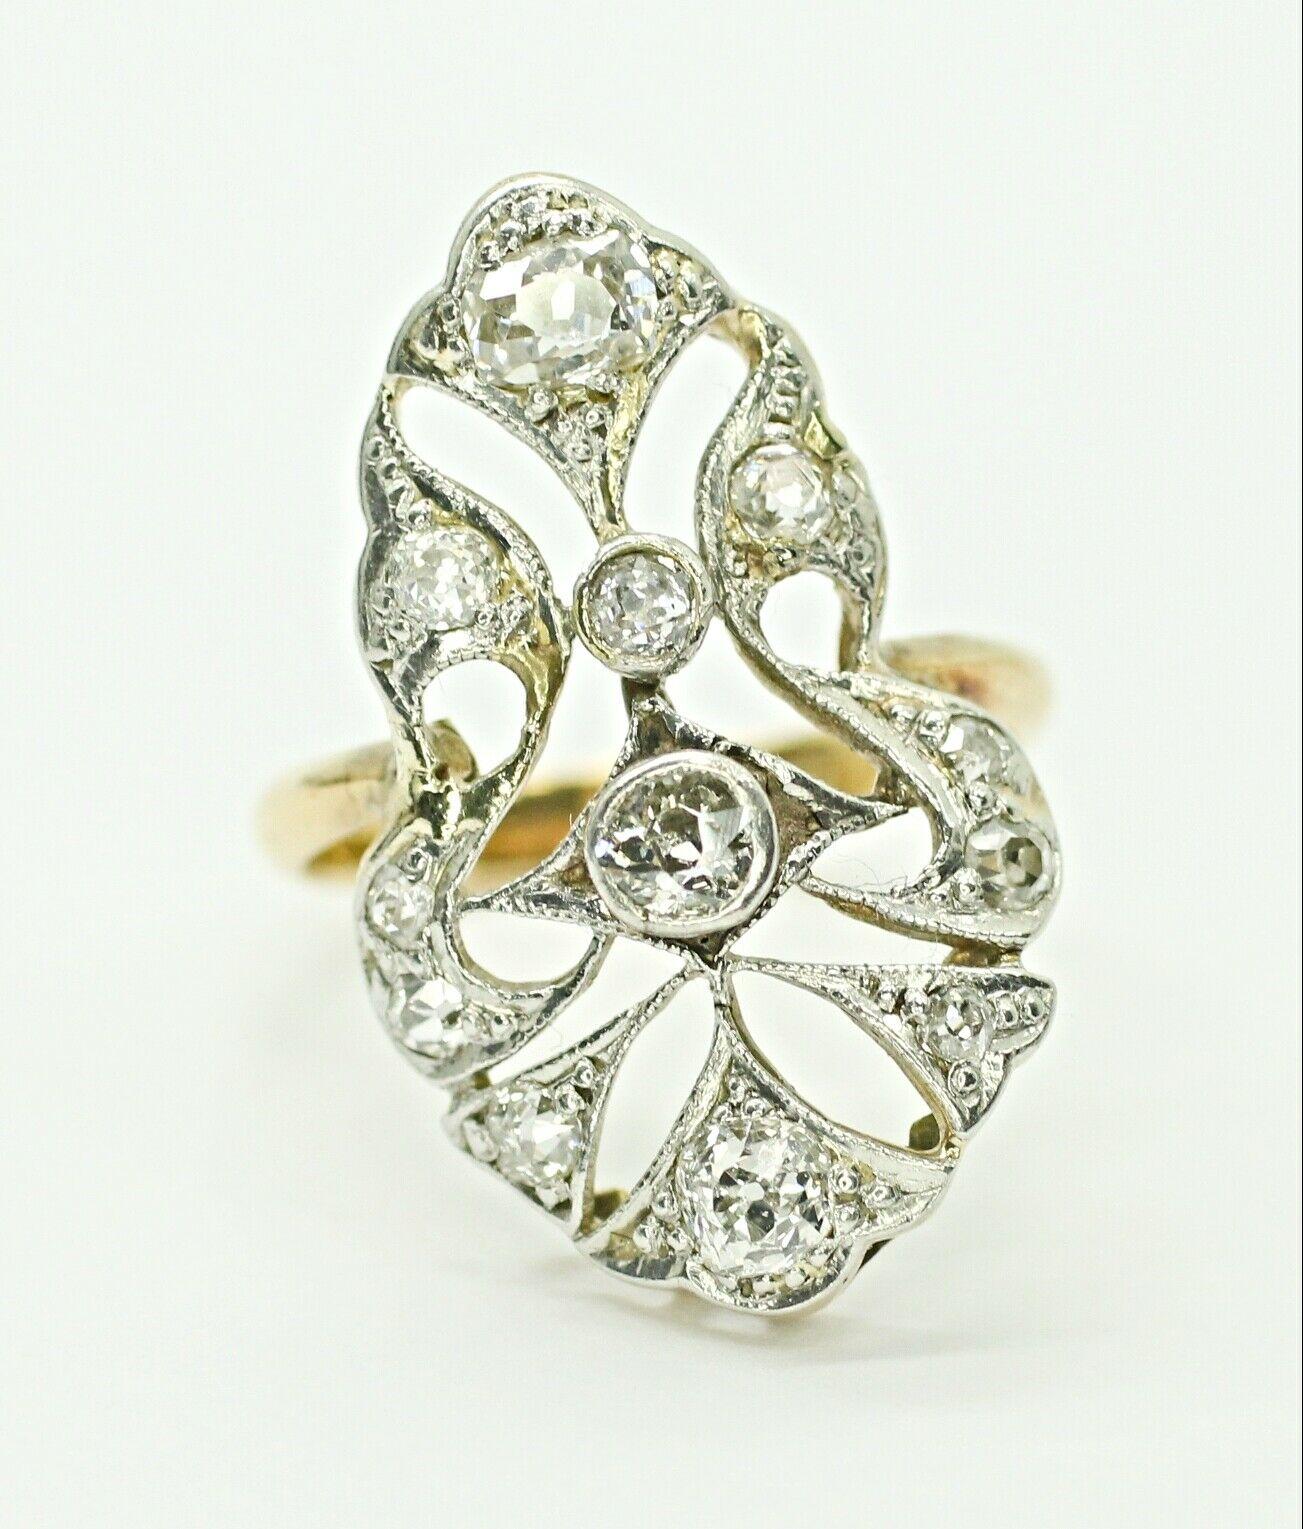 Women's or Men's Vintage Art Deco Style Diamond Ring in 18k Gold